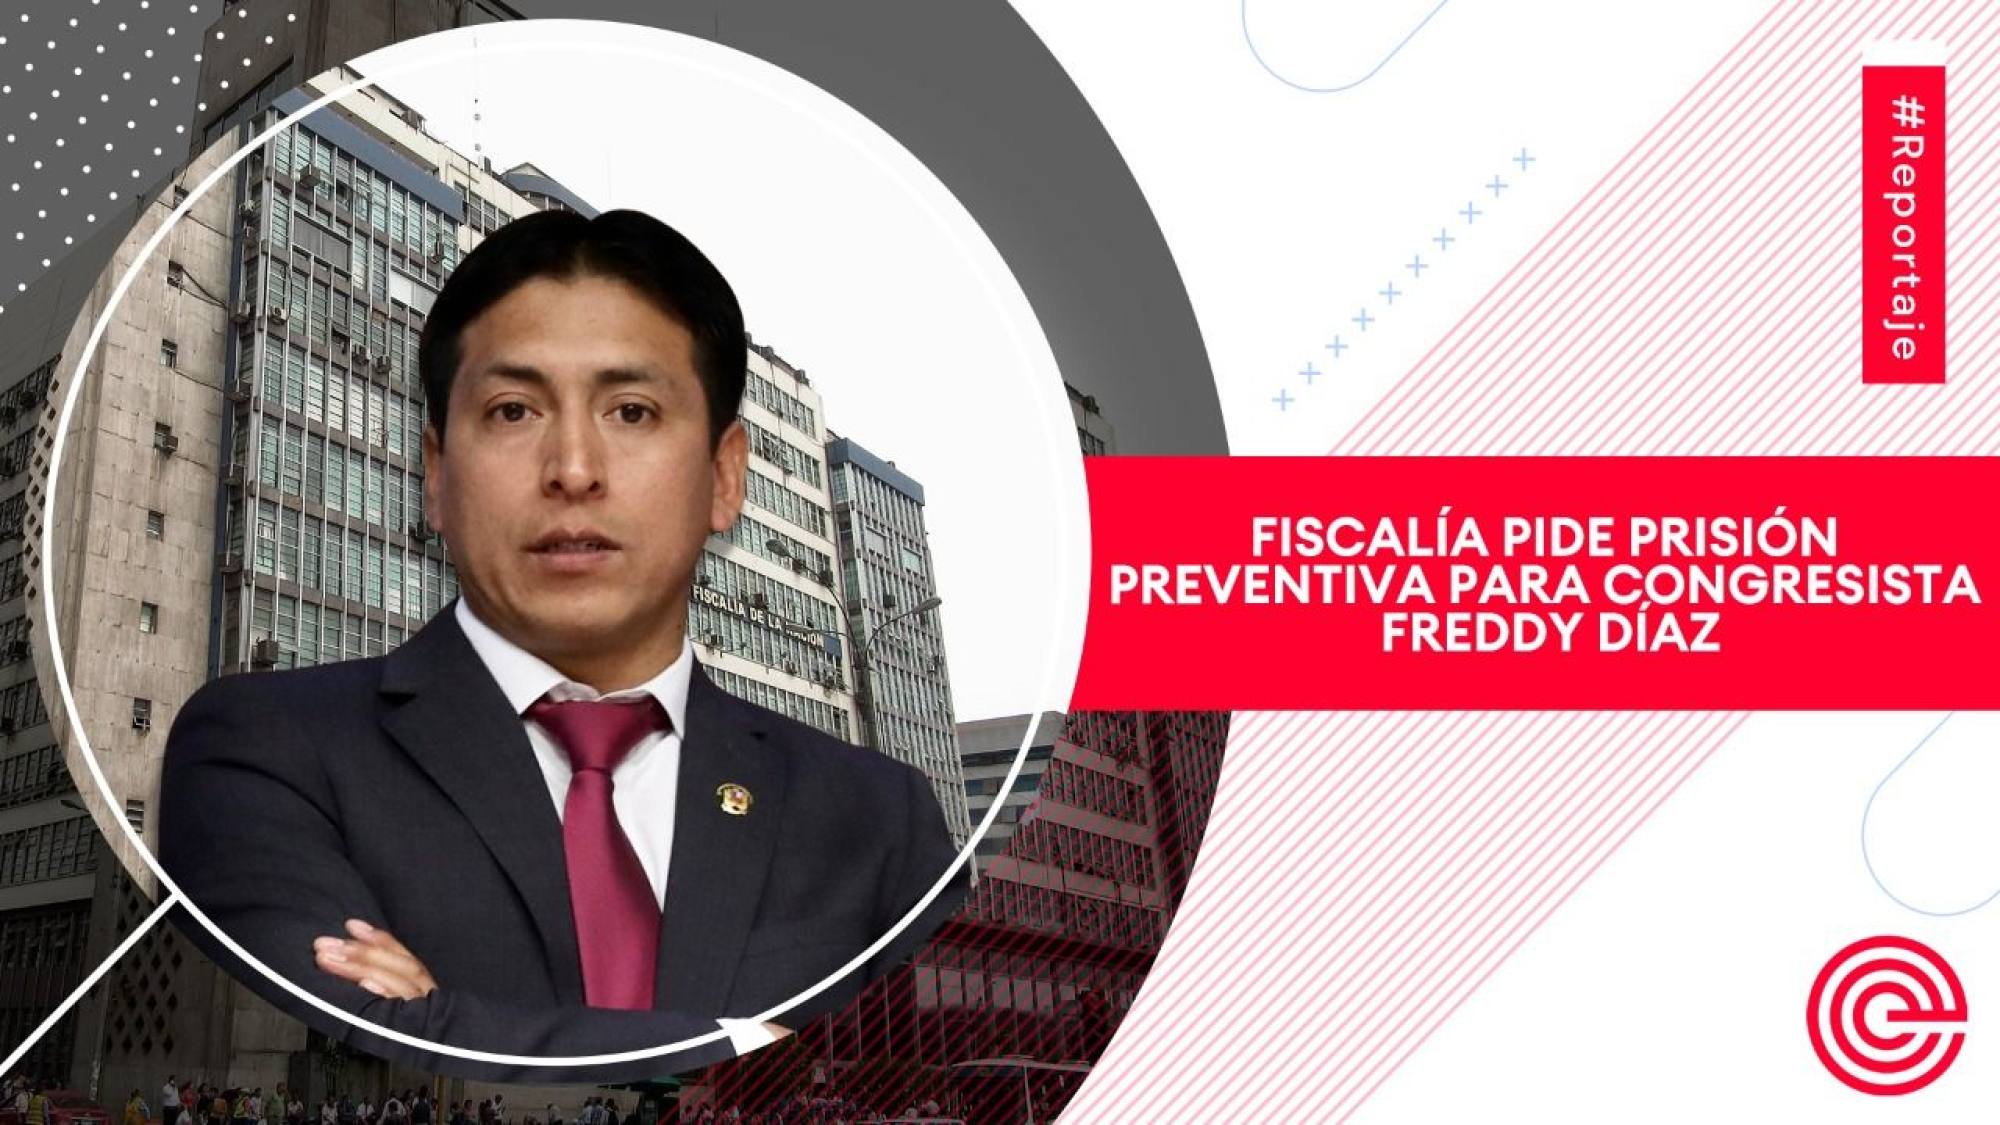 Fiscalía pide prisión preventiva para congresista Freddy Díaz, Epicentro TV